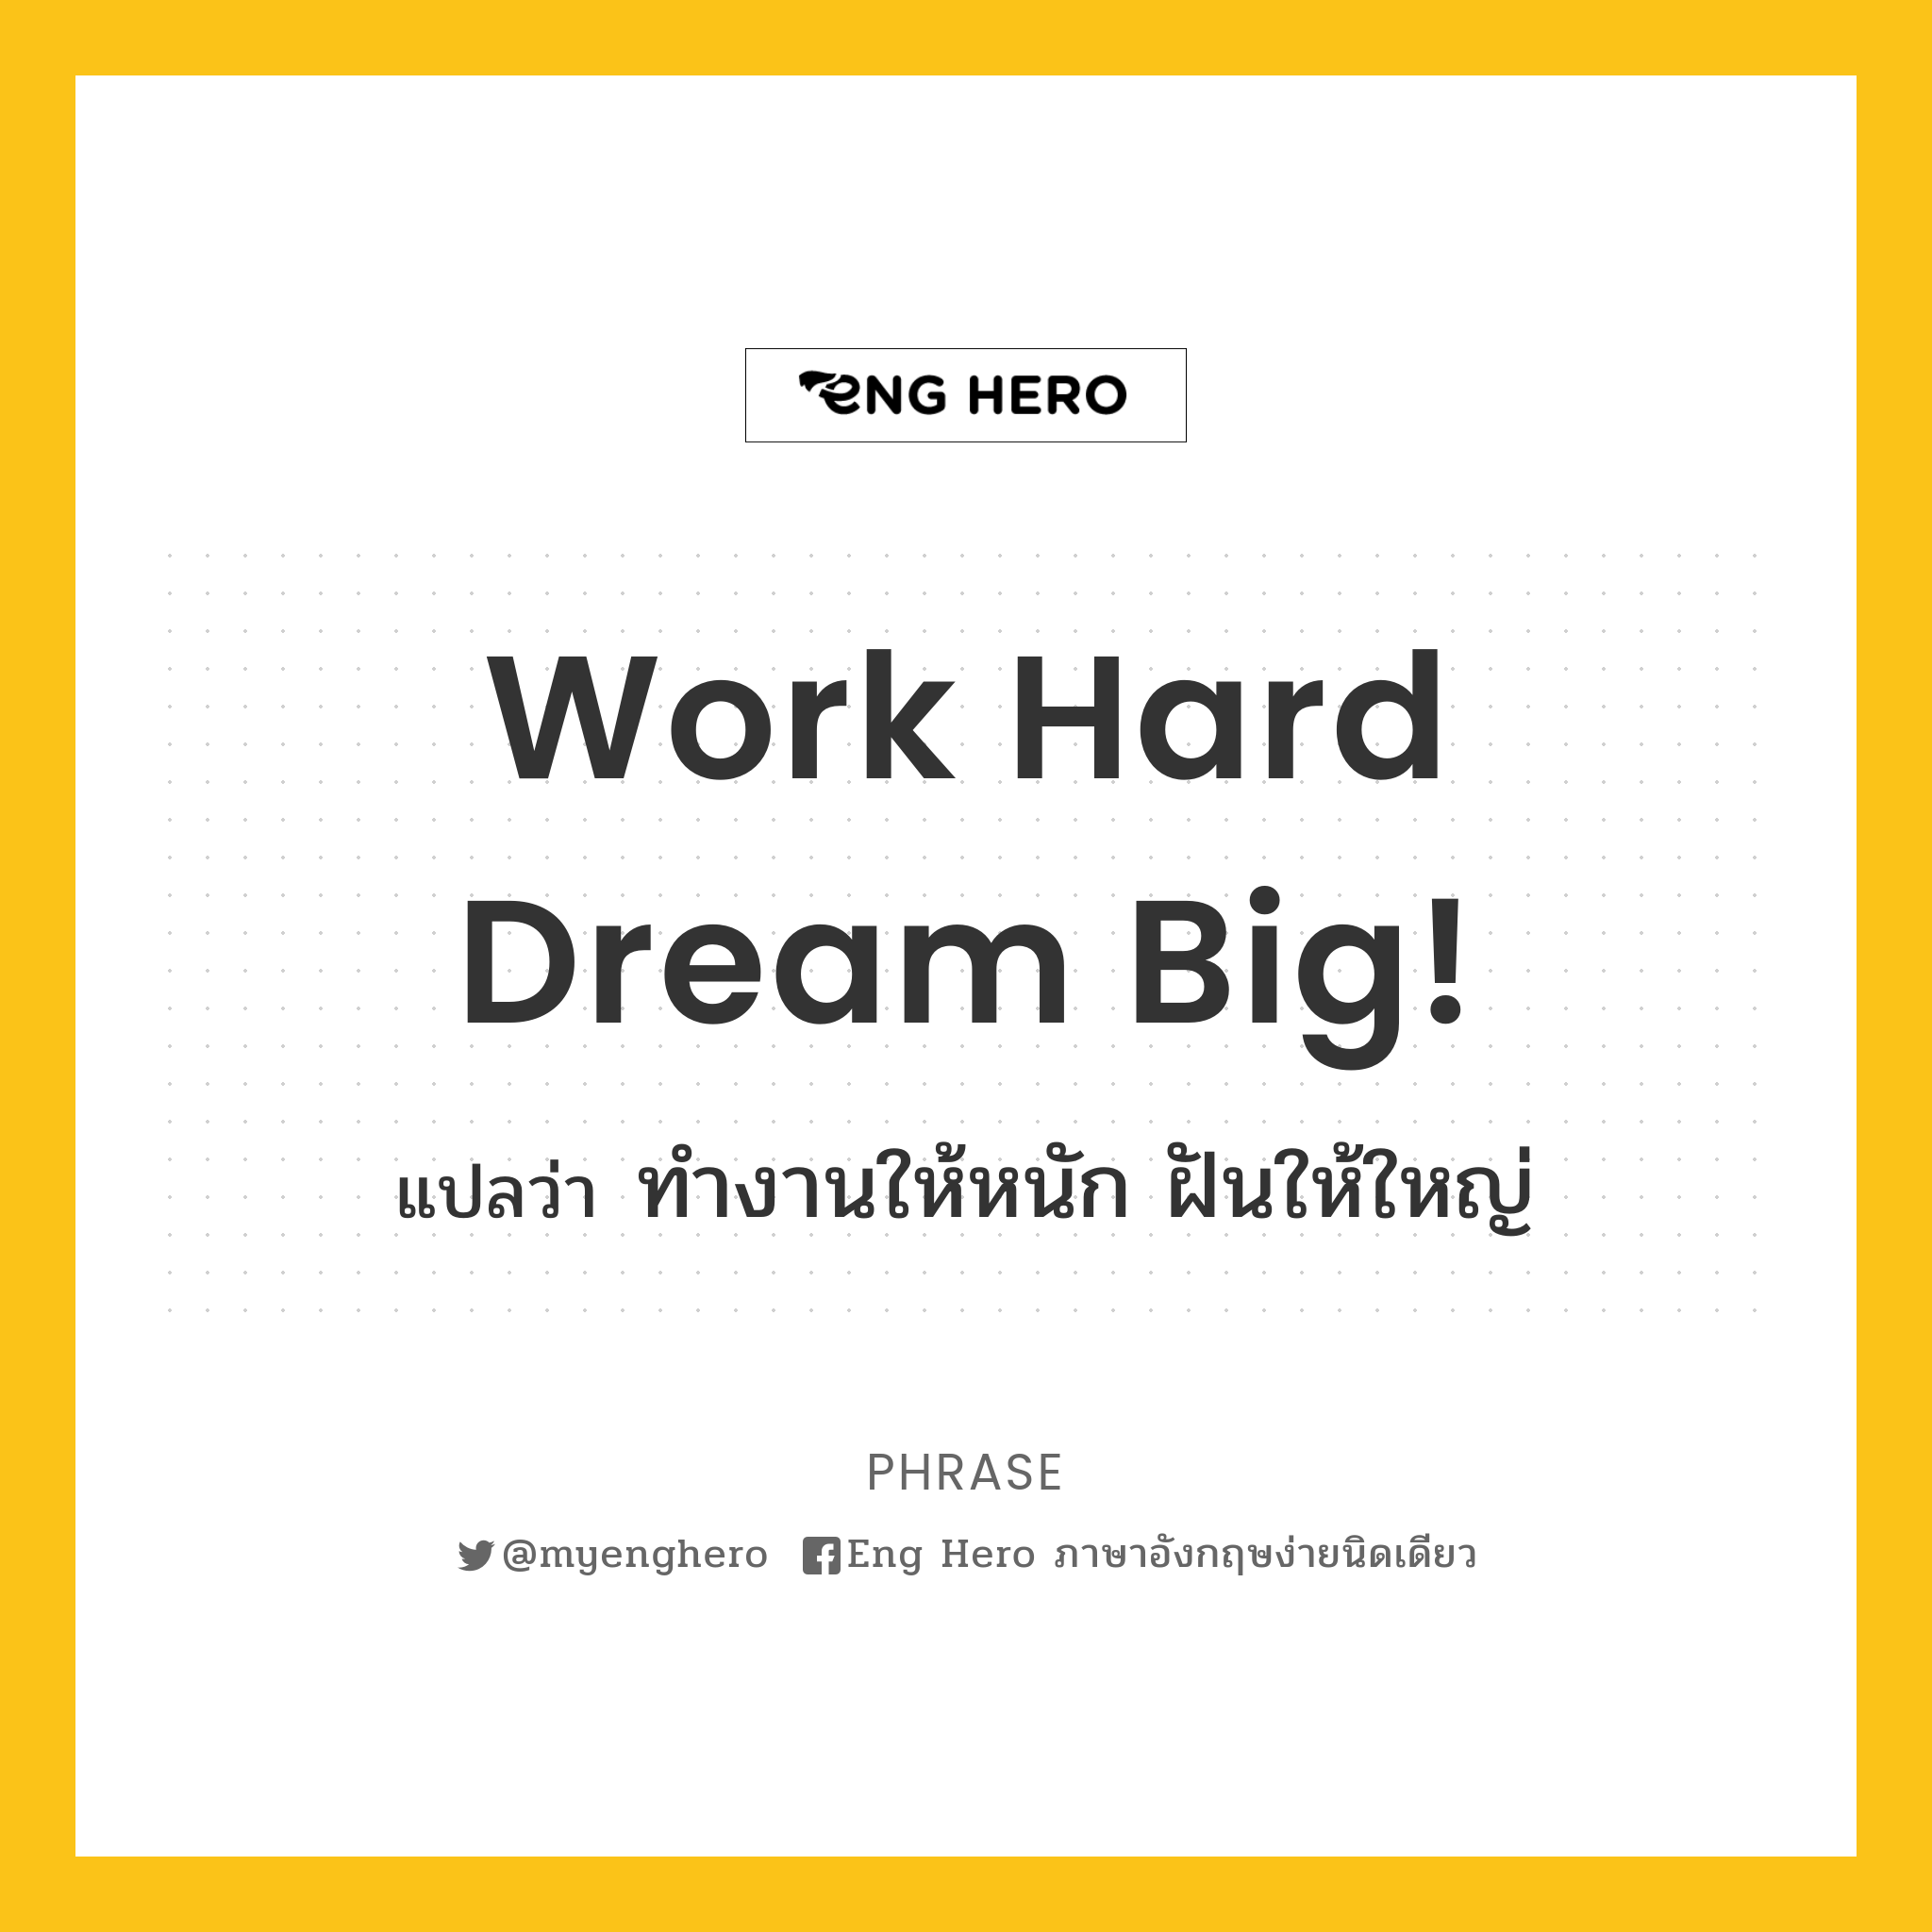 Work hard Dream big!